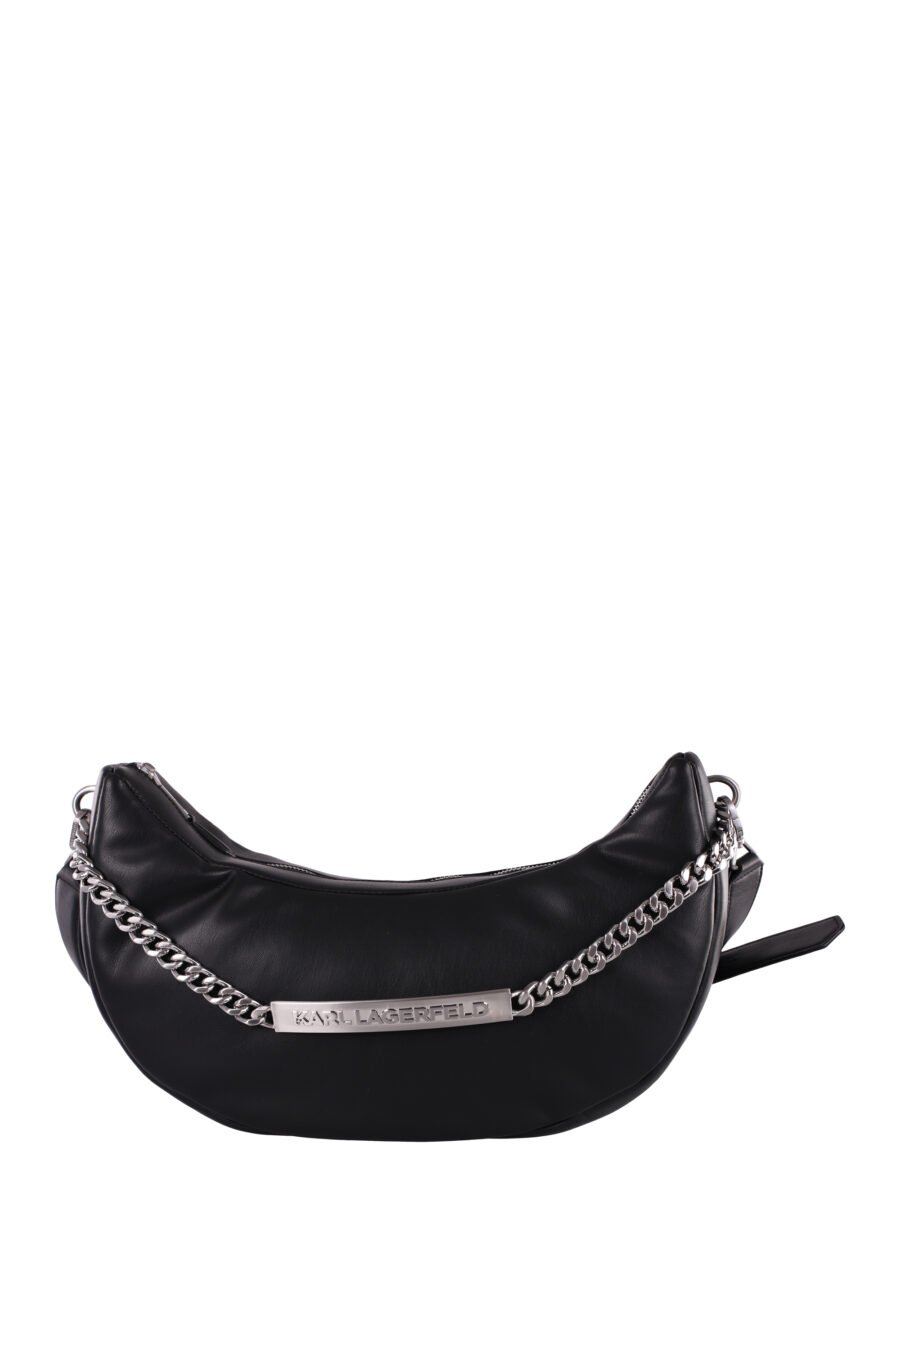 Bolso negro estilo hobo con cadena plateada - IMG 6042